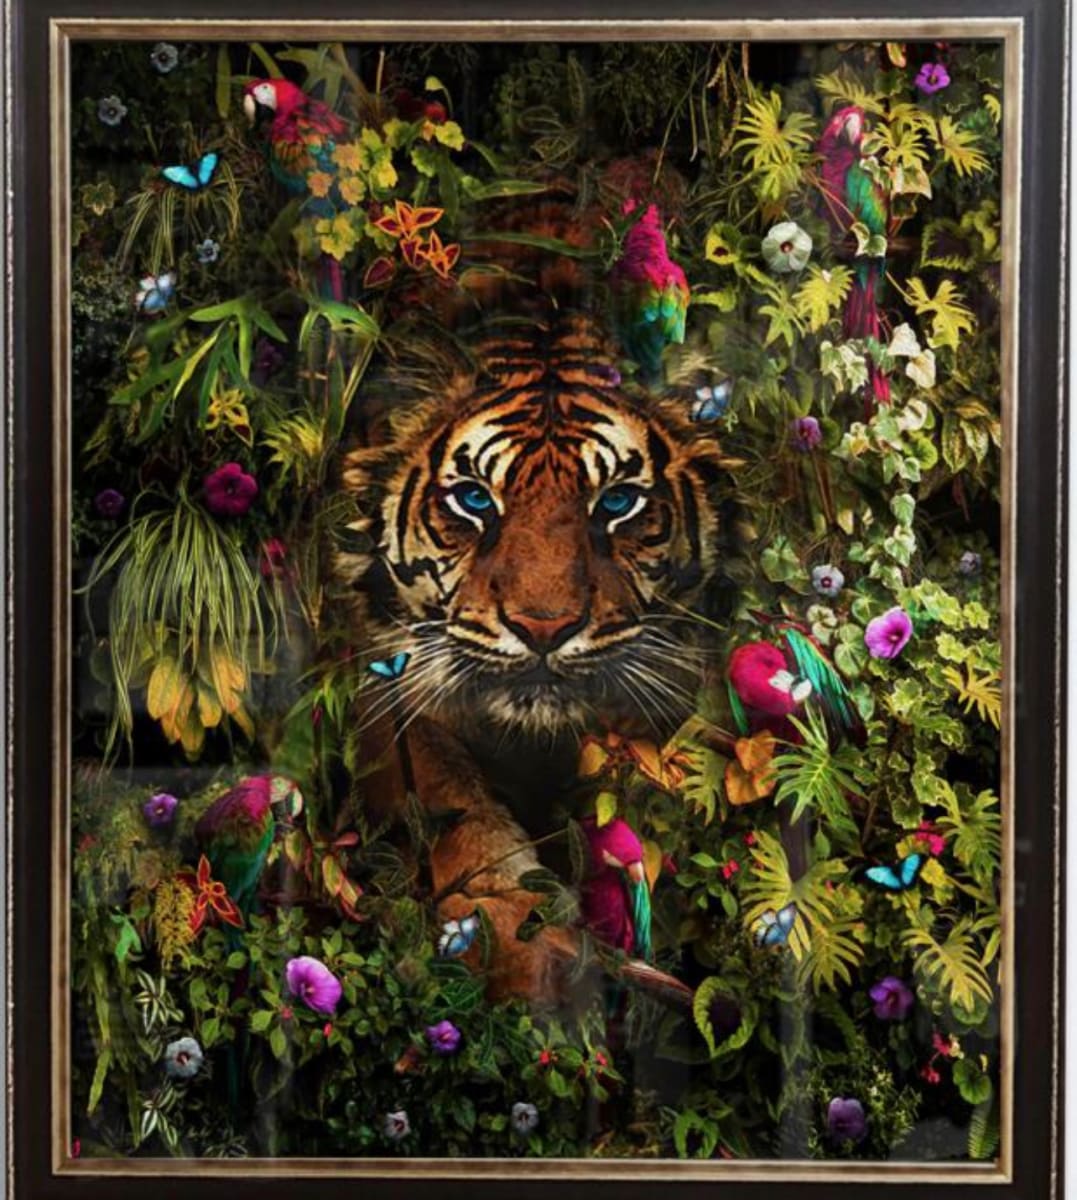 Iain Alexander by Iain Alexander  Image: Tiger